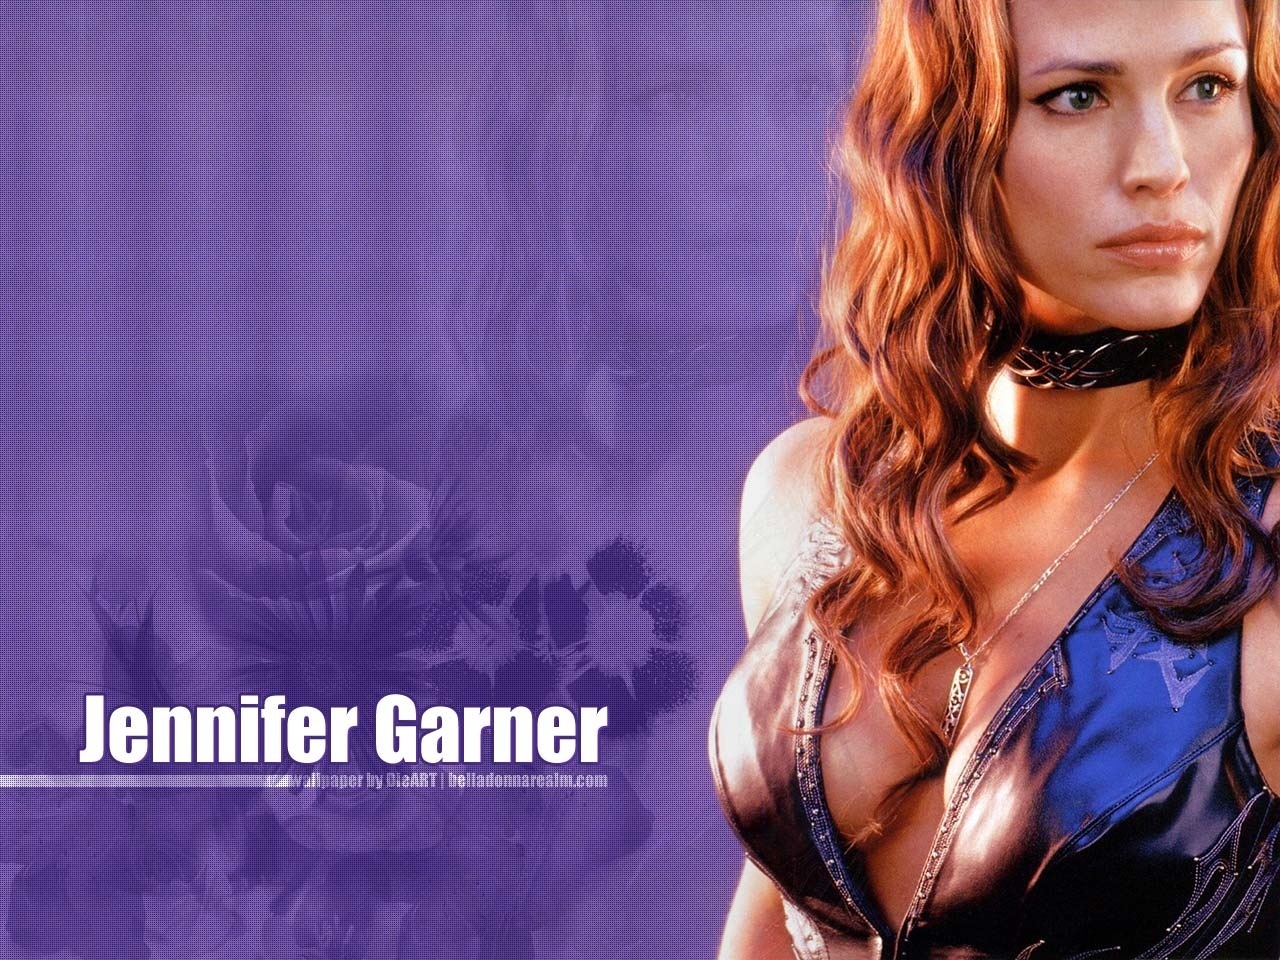 Jennifer-Garner-jennifer-garner-7377069-1280-960.jpg